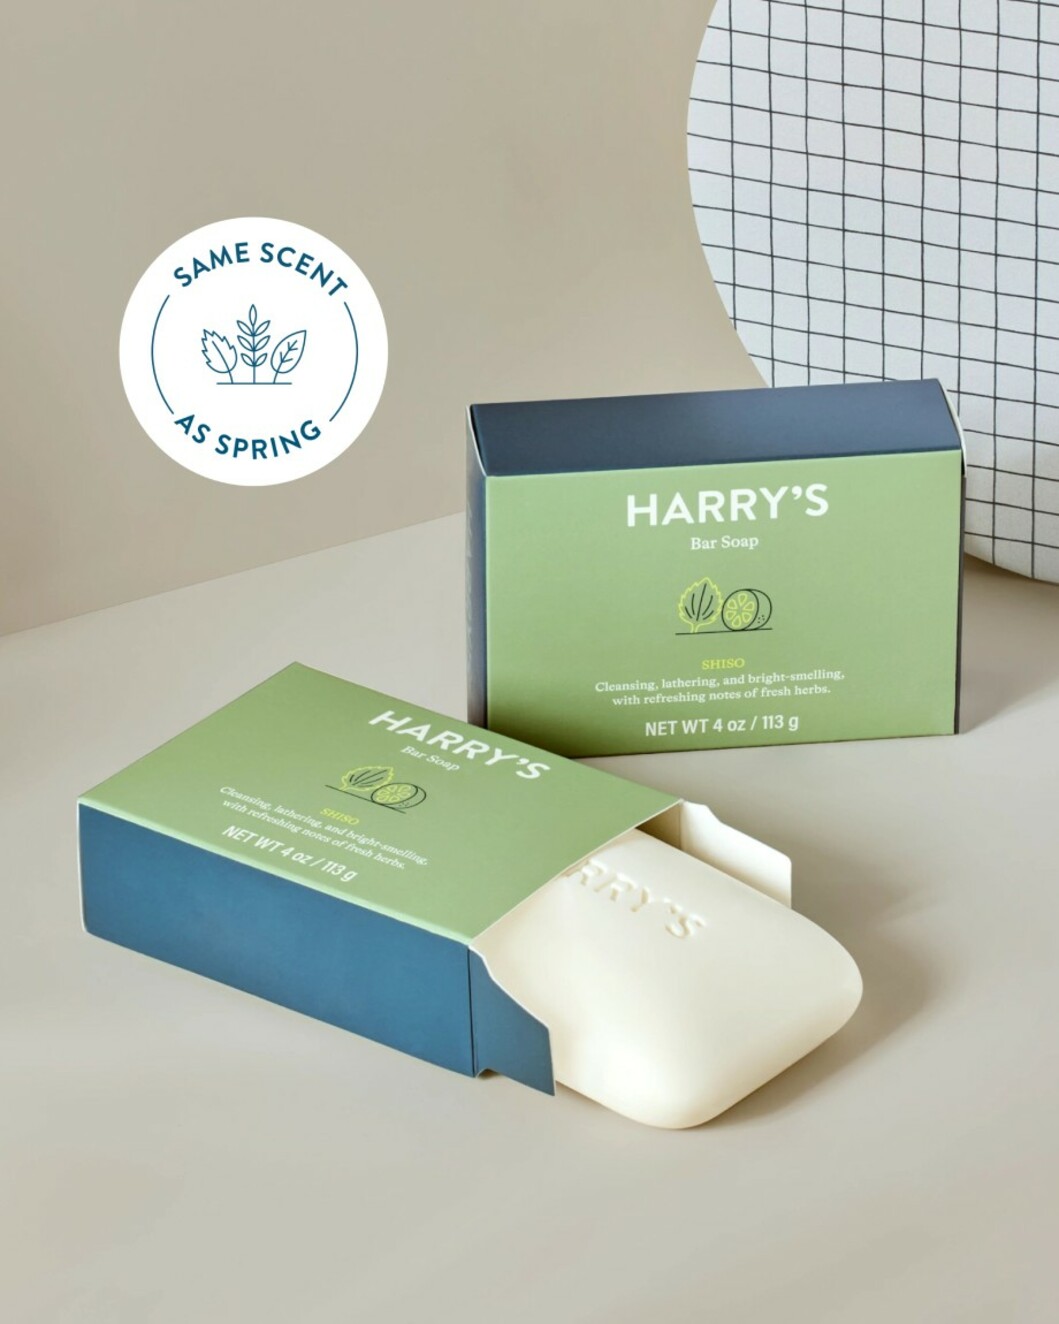 HARRY'S Shiso Bar Soap (12-PACK) 5 oz Fresh Herbs (New) – PayWut